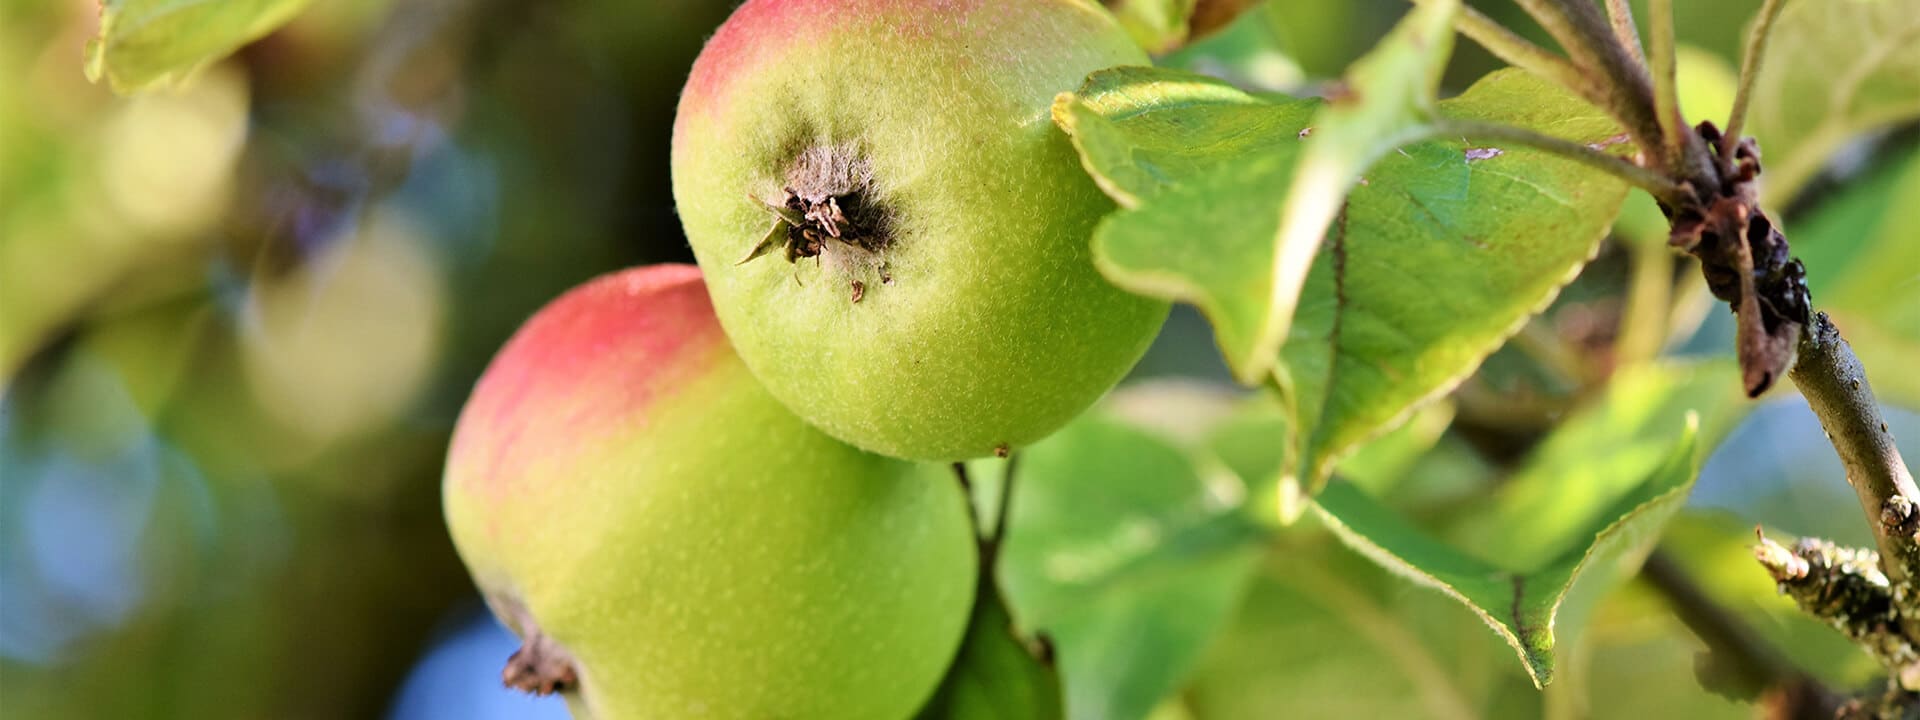 https://www.rivulis.com/wp-content/uploads/2019/05/Apples_Pears.jpg